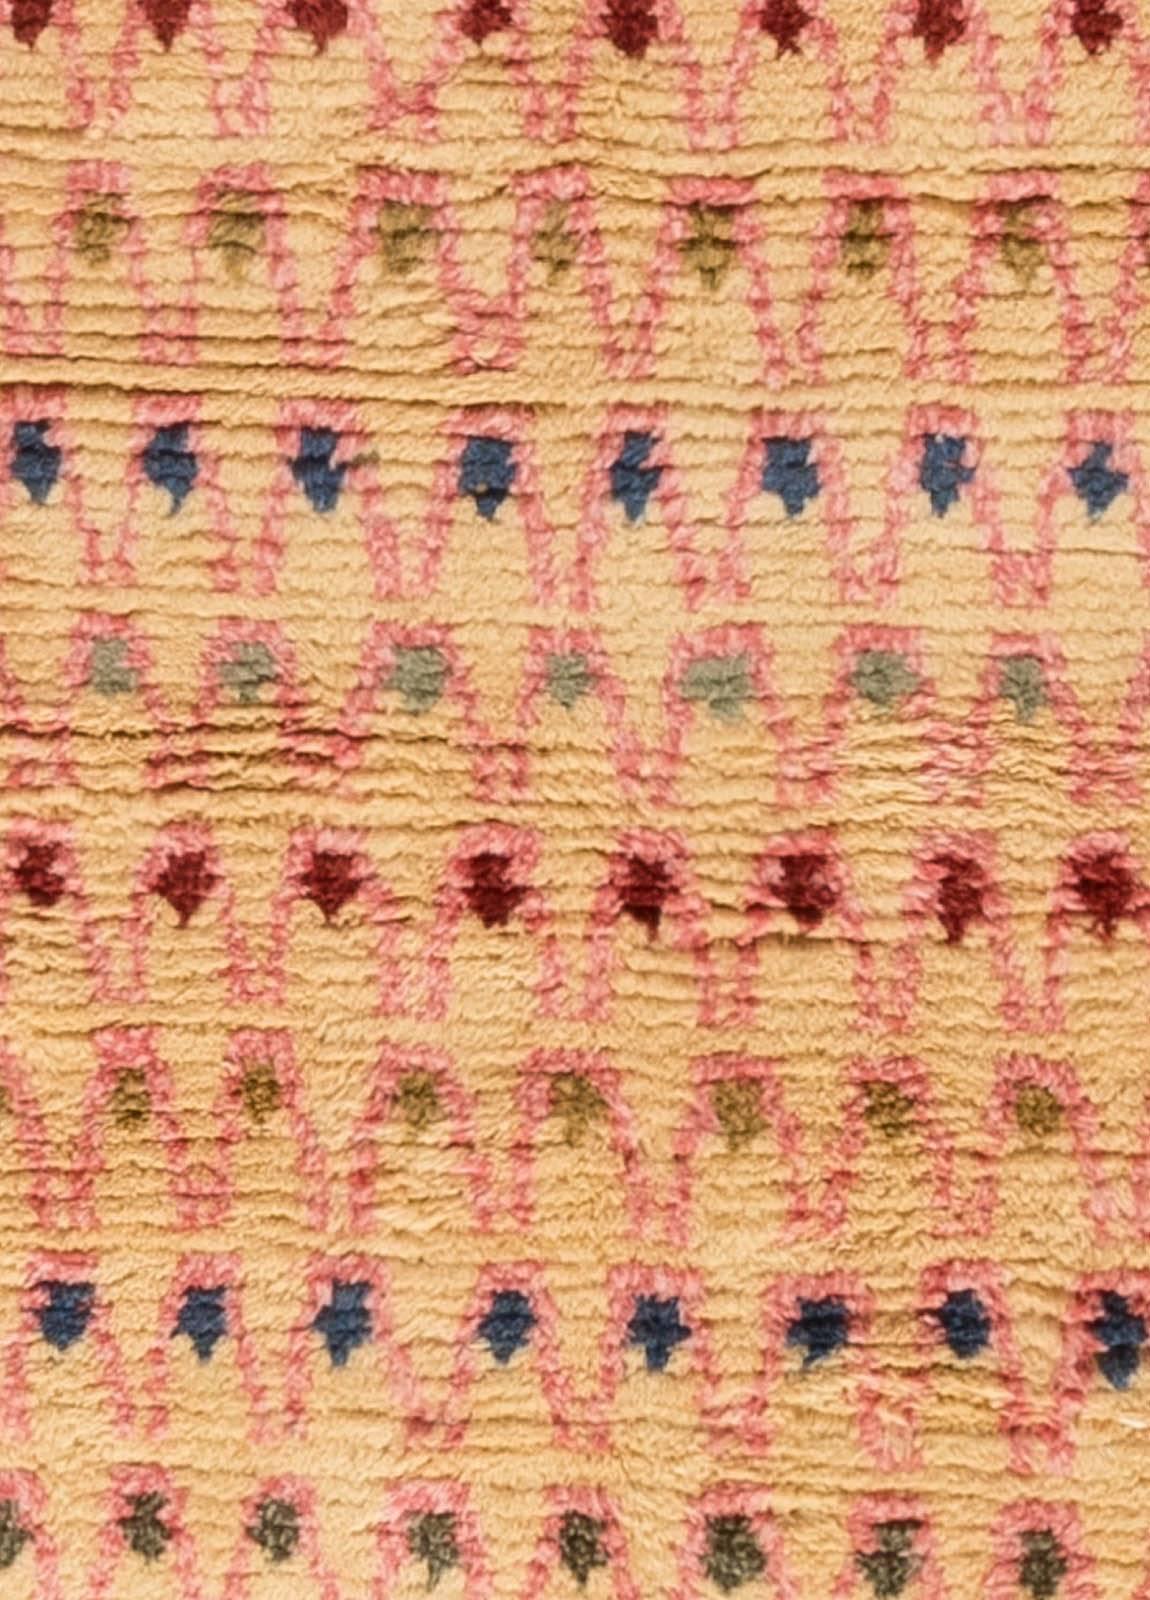 Contemporary Rya rainbow handmade wool rug by Doris Leslie Blau.
Size: 8'10